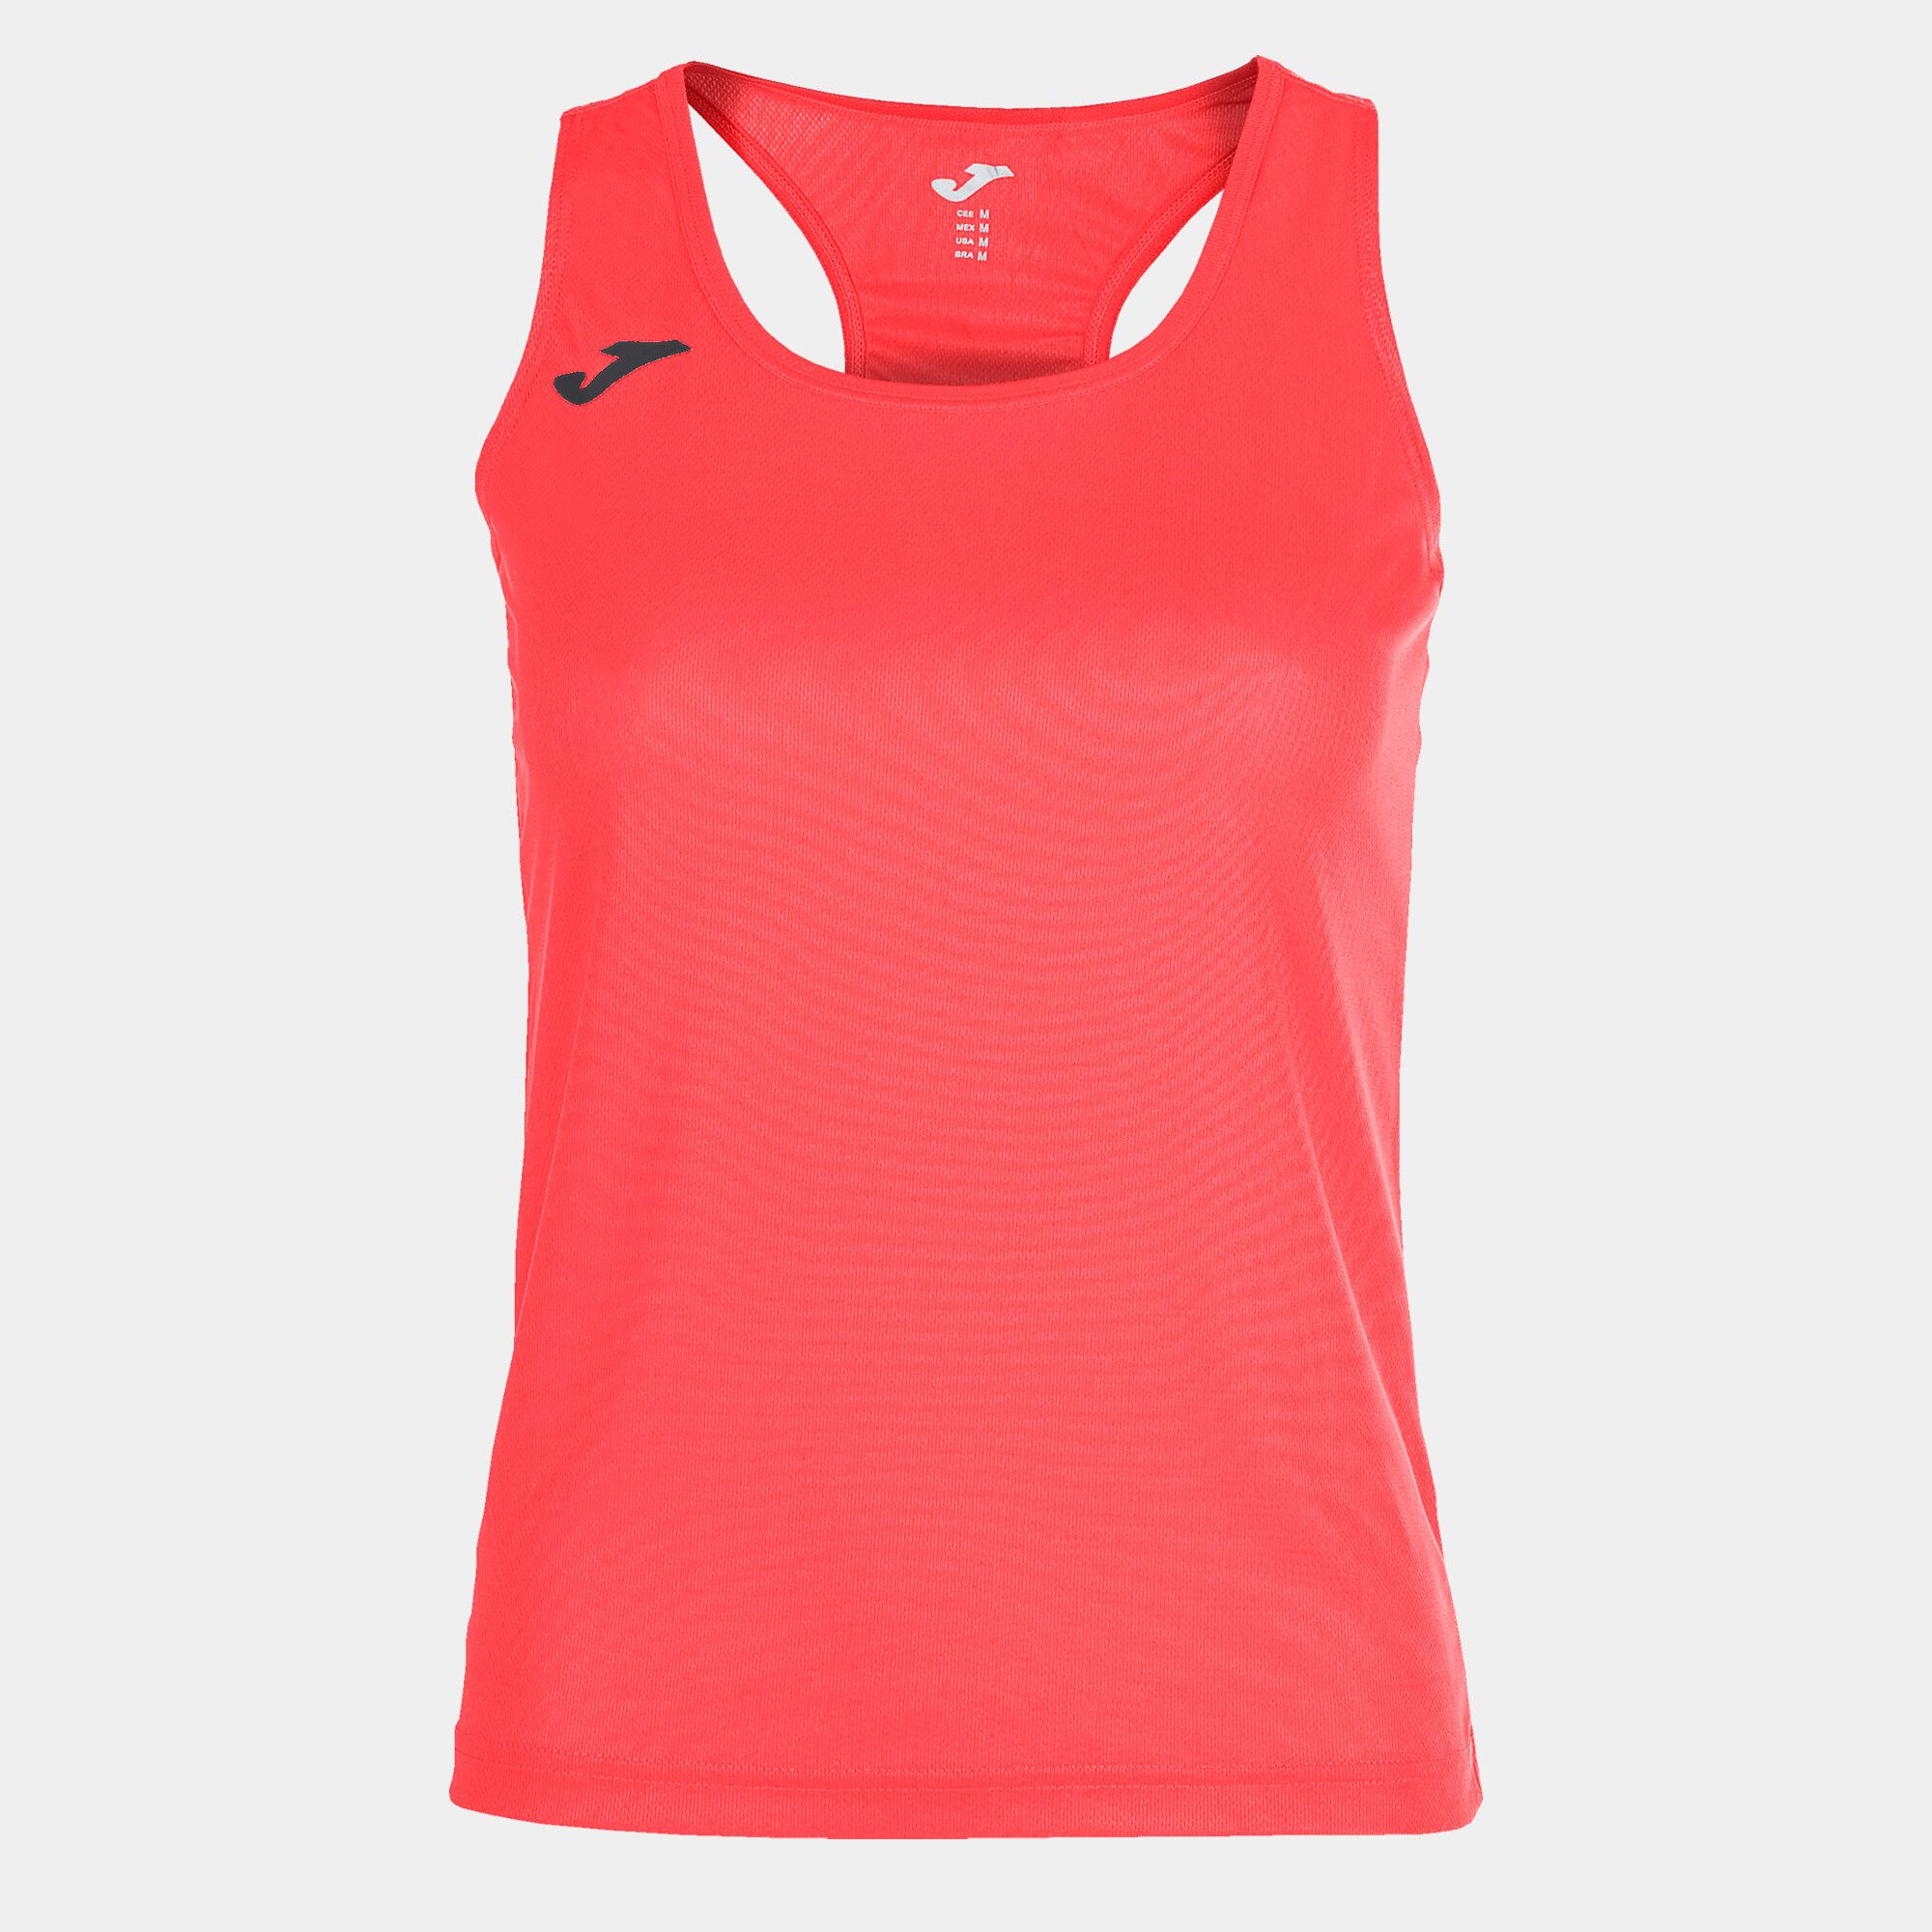 T-shirt de alça mulher Siena II coral fluorescente